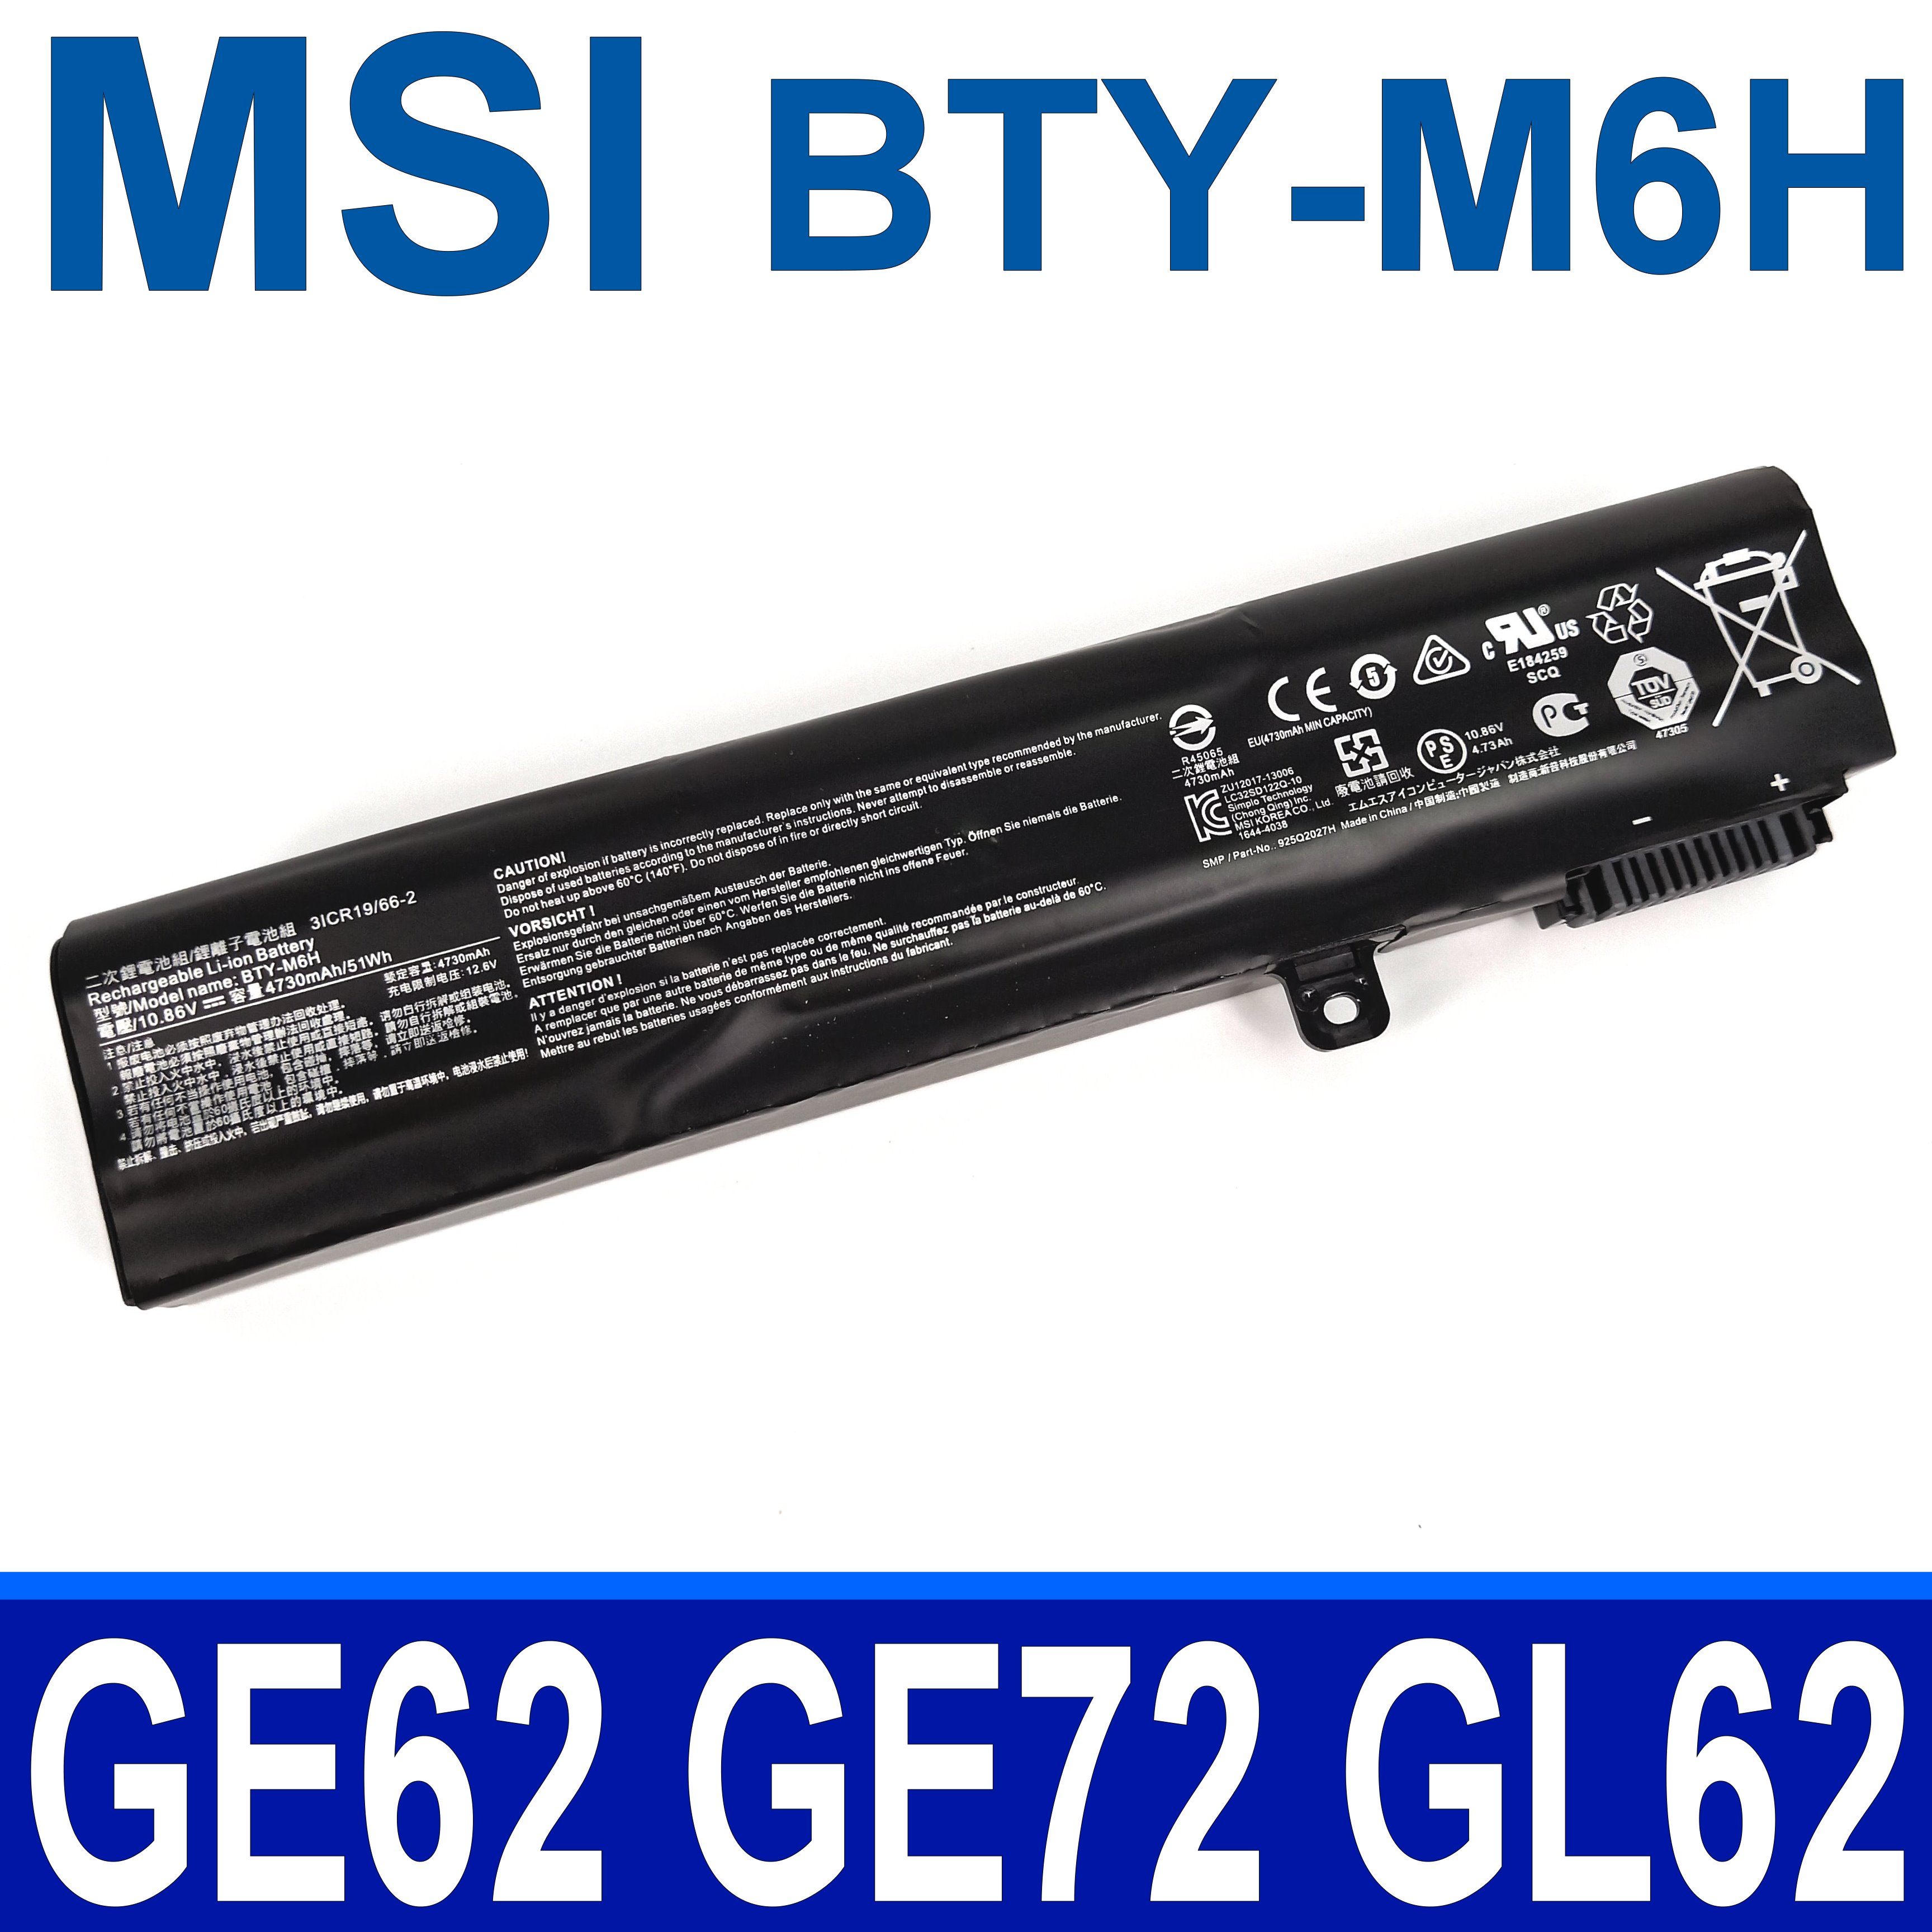 MSI BTY-M6H 日系電芯 電池 MS-16J1 MS-16J2 MS-16J3 MS-16J5L MS-16J6 MS-16J6B MS-16P MS-16P3 MS-1792 1793 1795 MS-17C6 GE62 GE62MVR GE62VR GE63 GE63VR GE72 GE72MVR GE72VR GE73 GE73VR GE75 GF62 GF62VR GF72 GF72VR GL62 GL62M GL63 GL62MVR